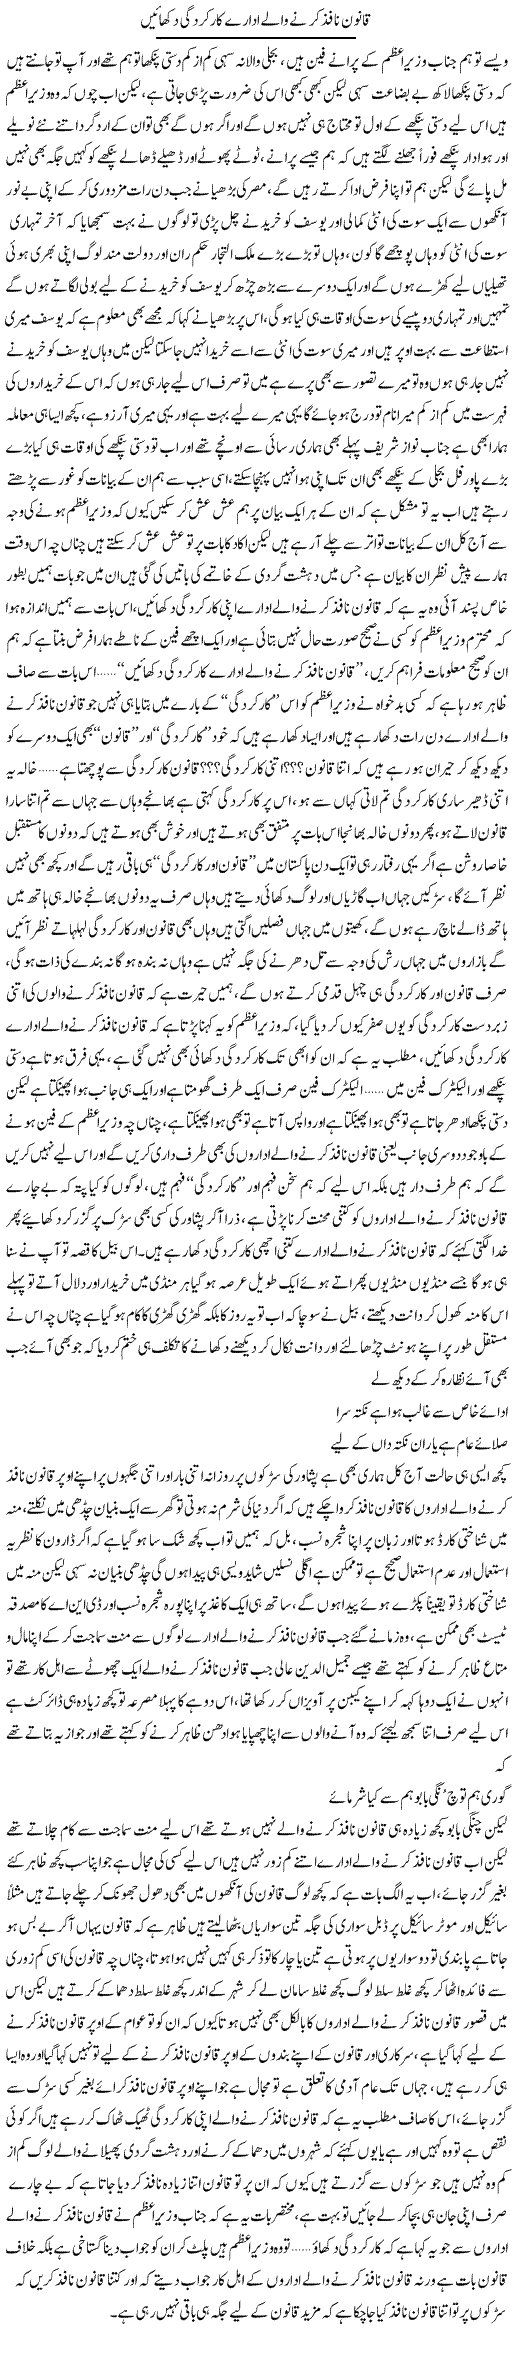 Kanoon Nafiz Karne Waly Idary Karkardgi Dikhain | Saad Ullah Jan Barq | Daily Urdu Columns